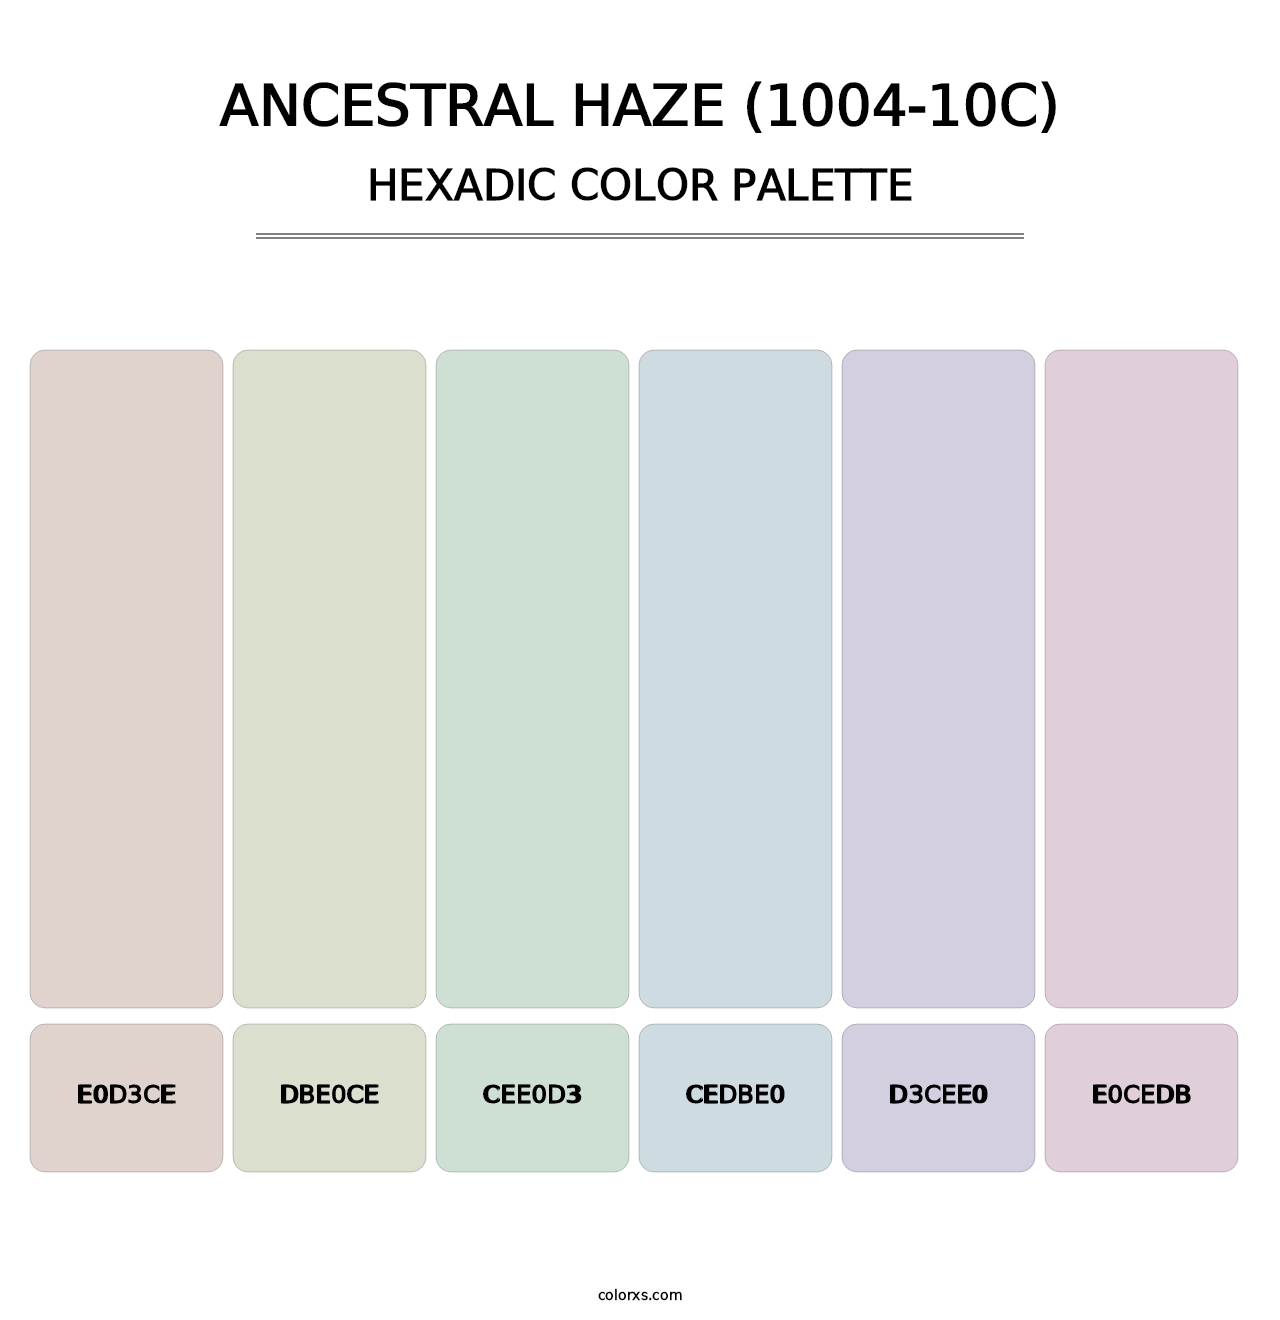 Ancestral Haze (1004-10C) - Hexadic Color Palette